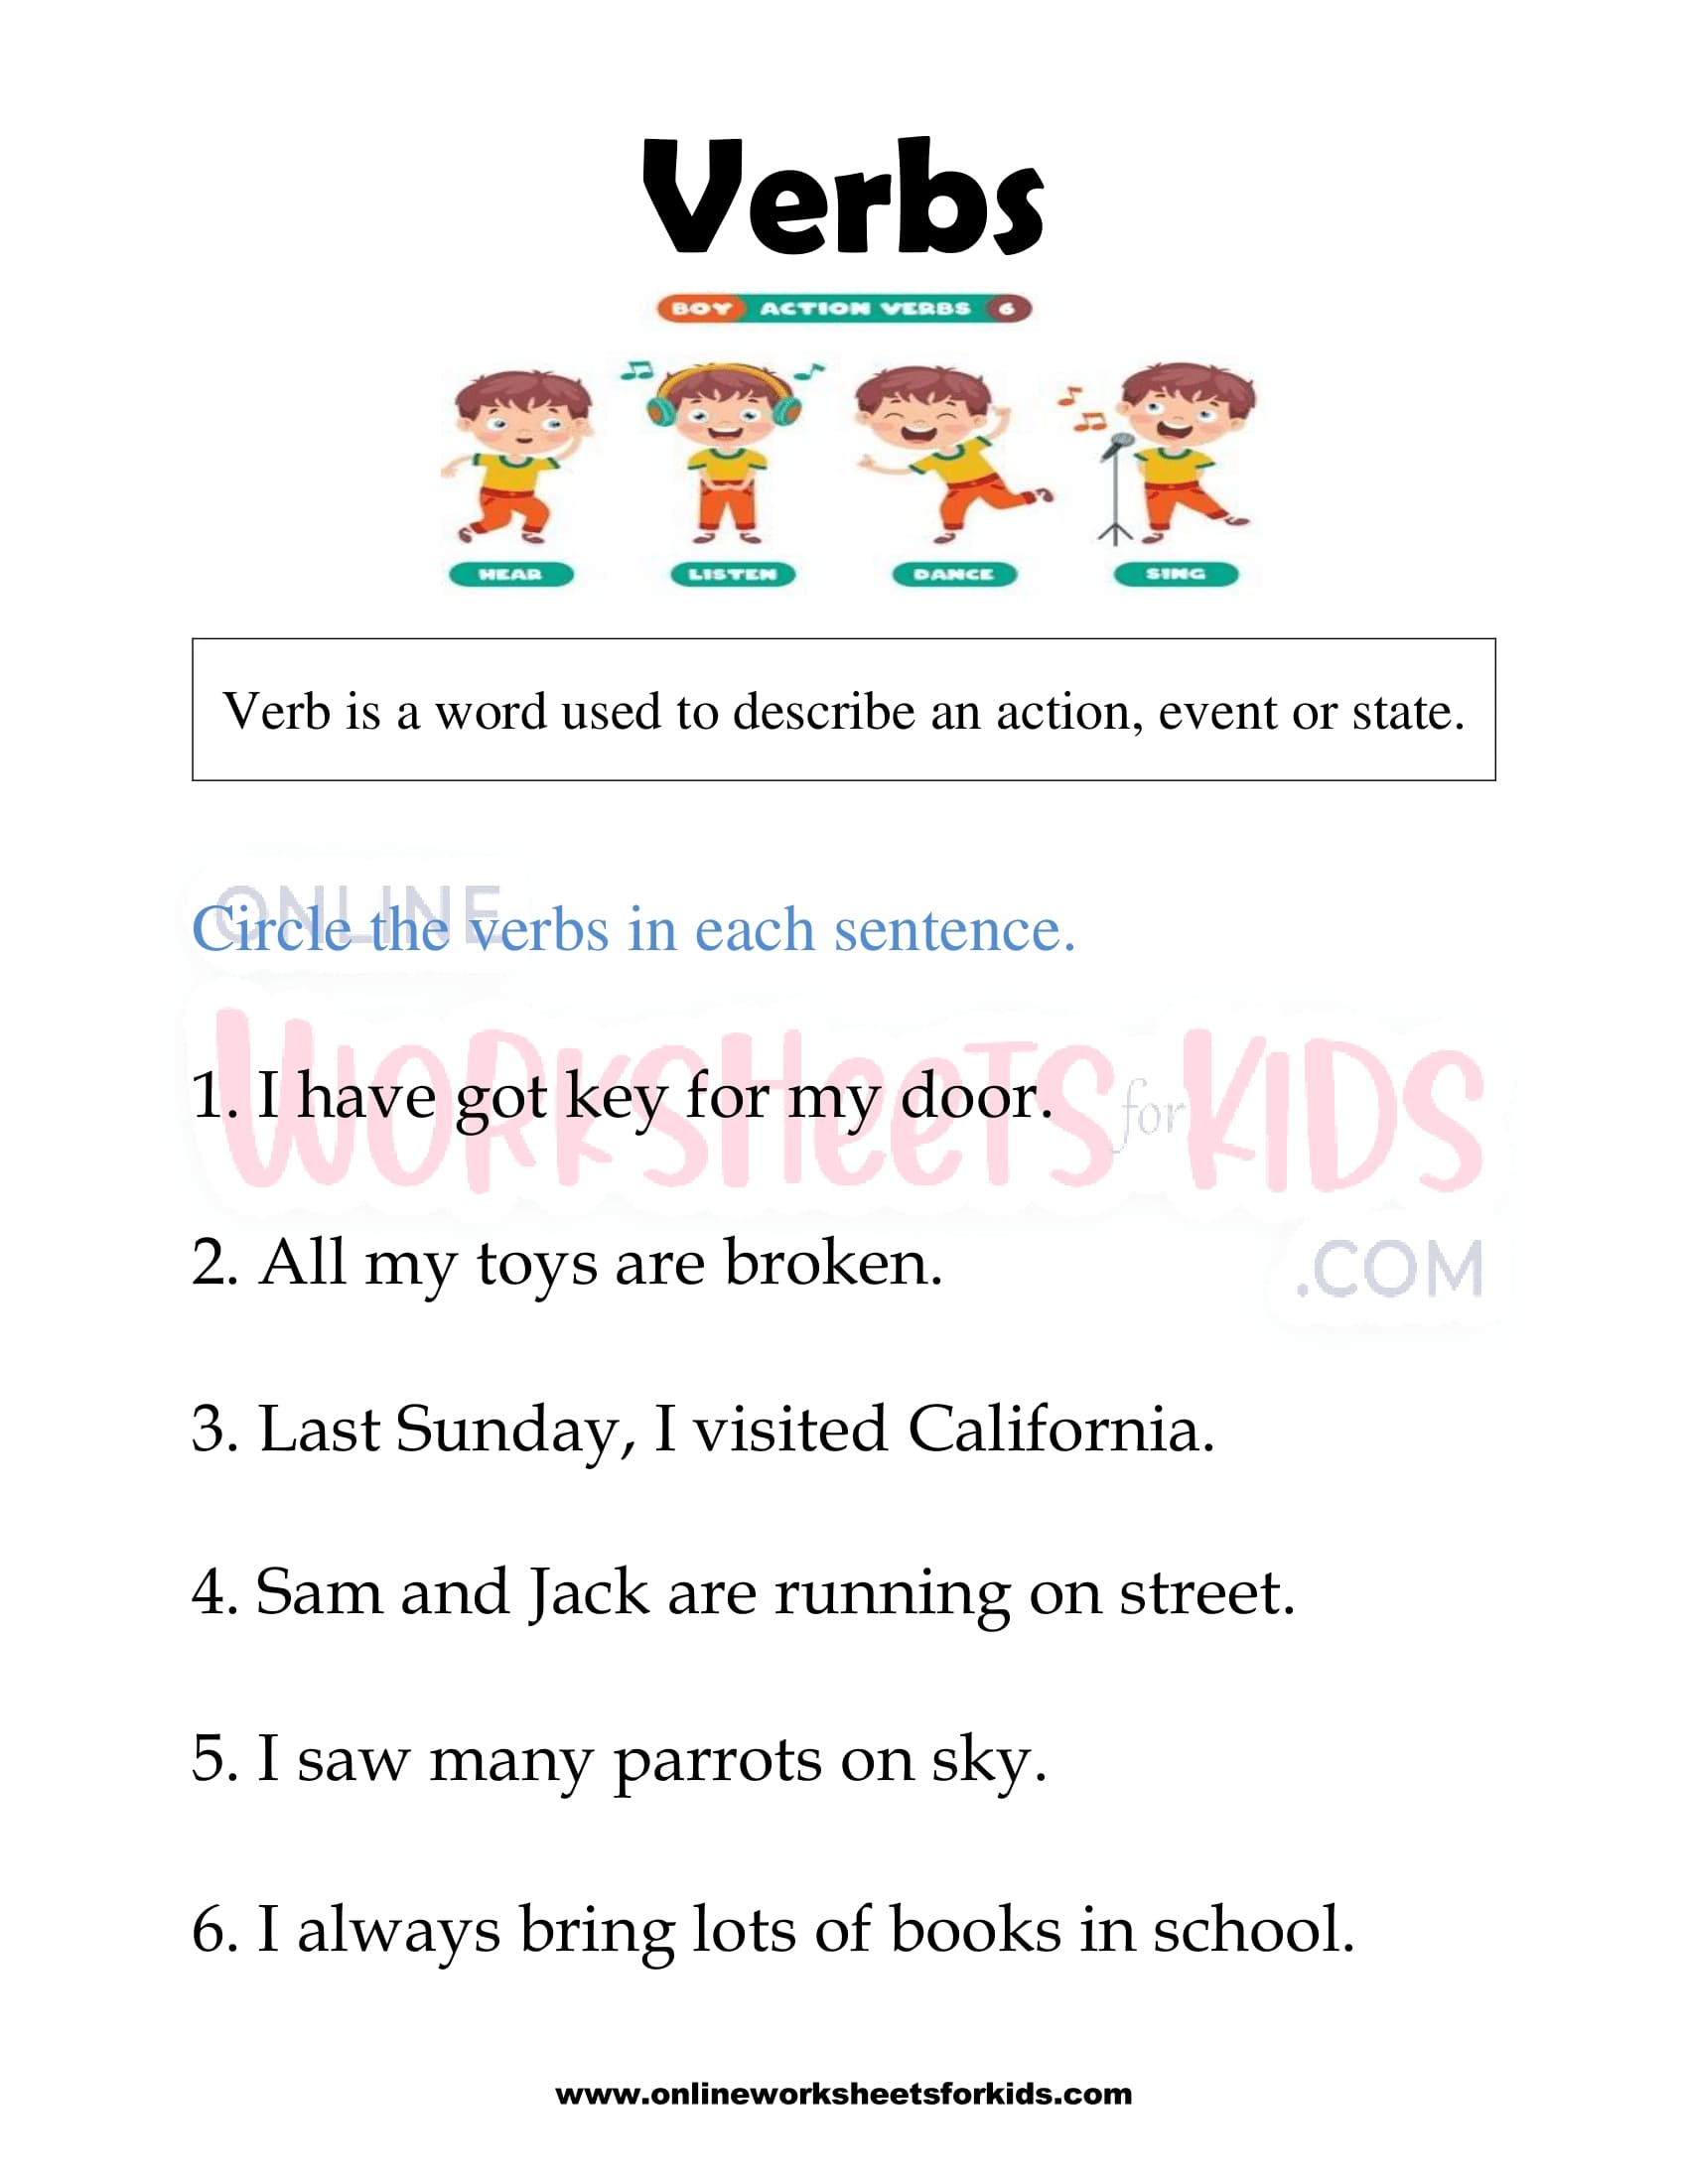 verbs-worksheets-for-grade-1-3